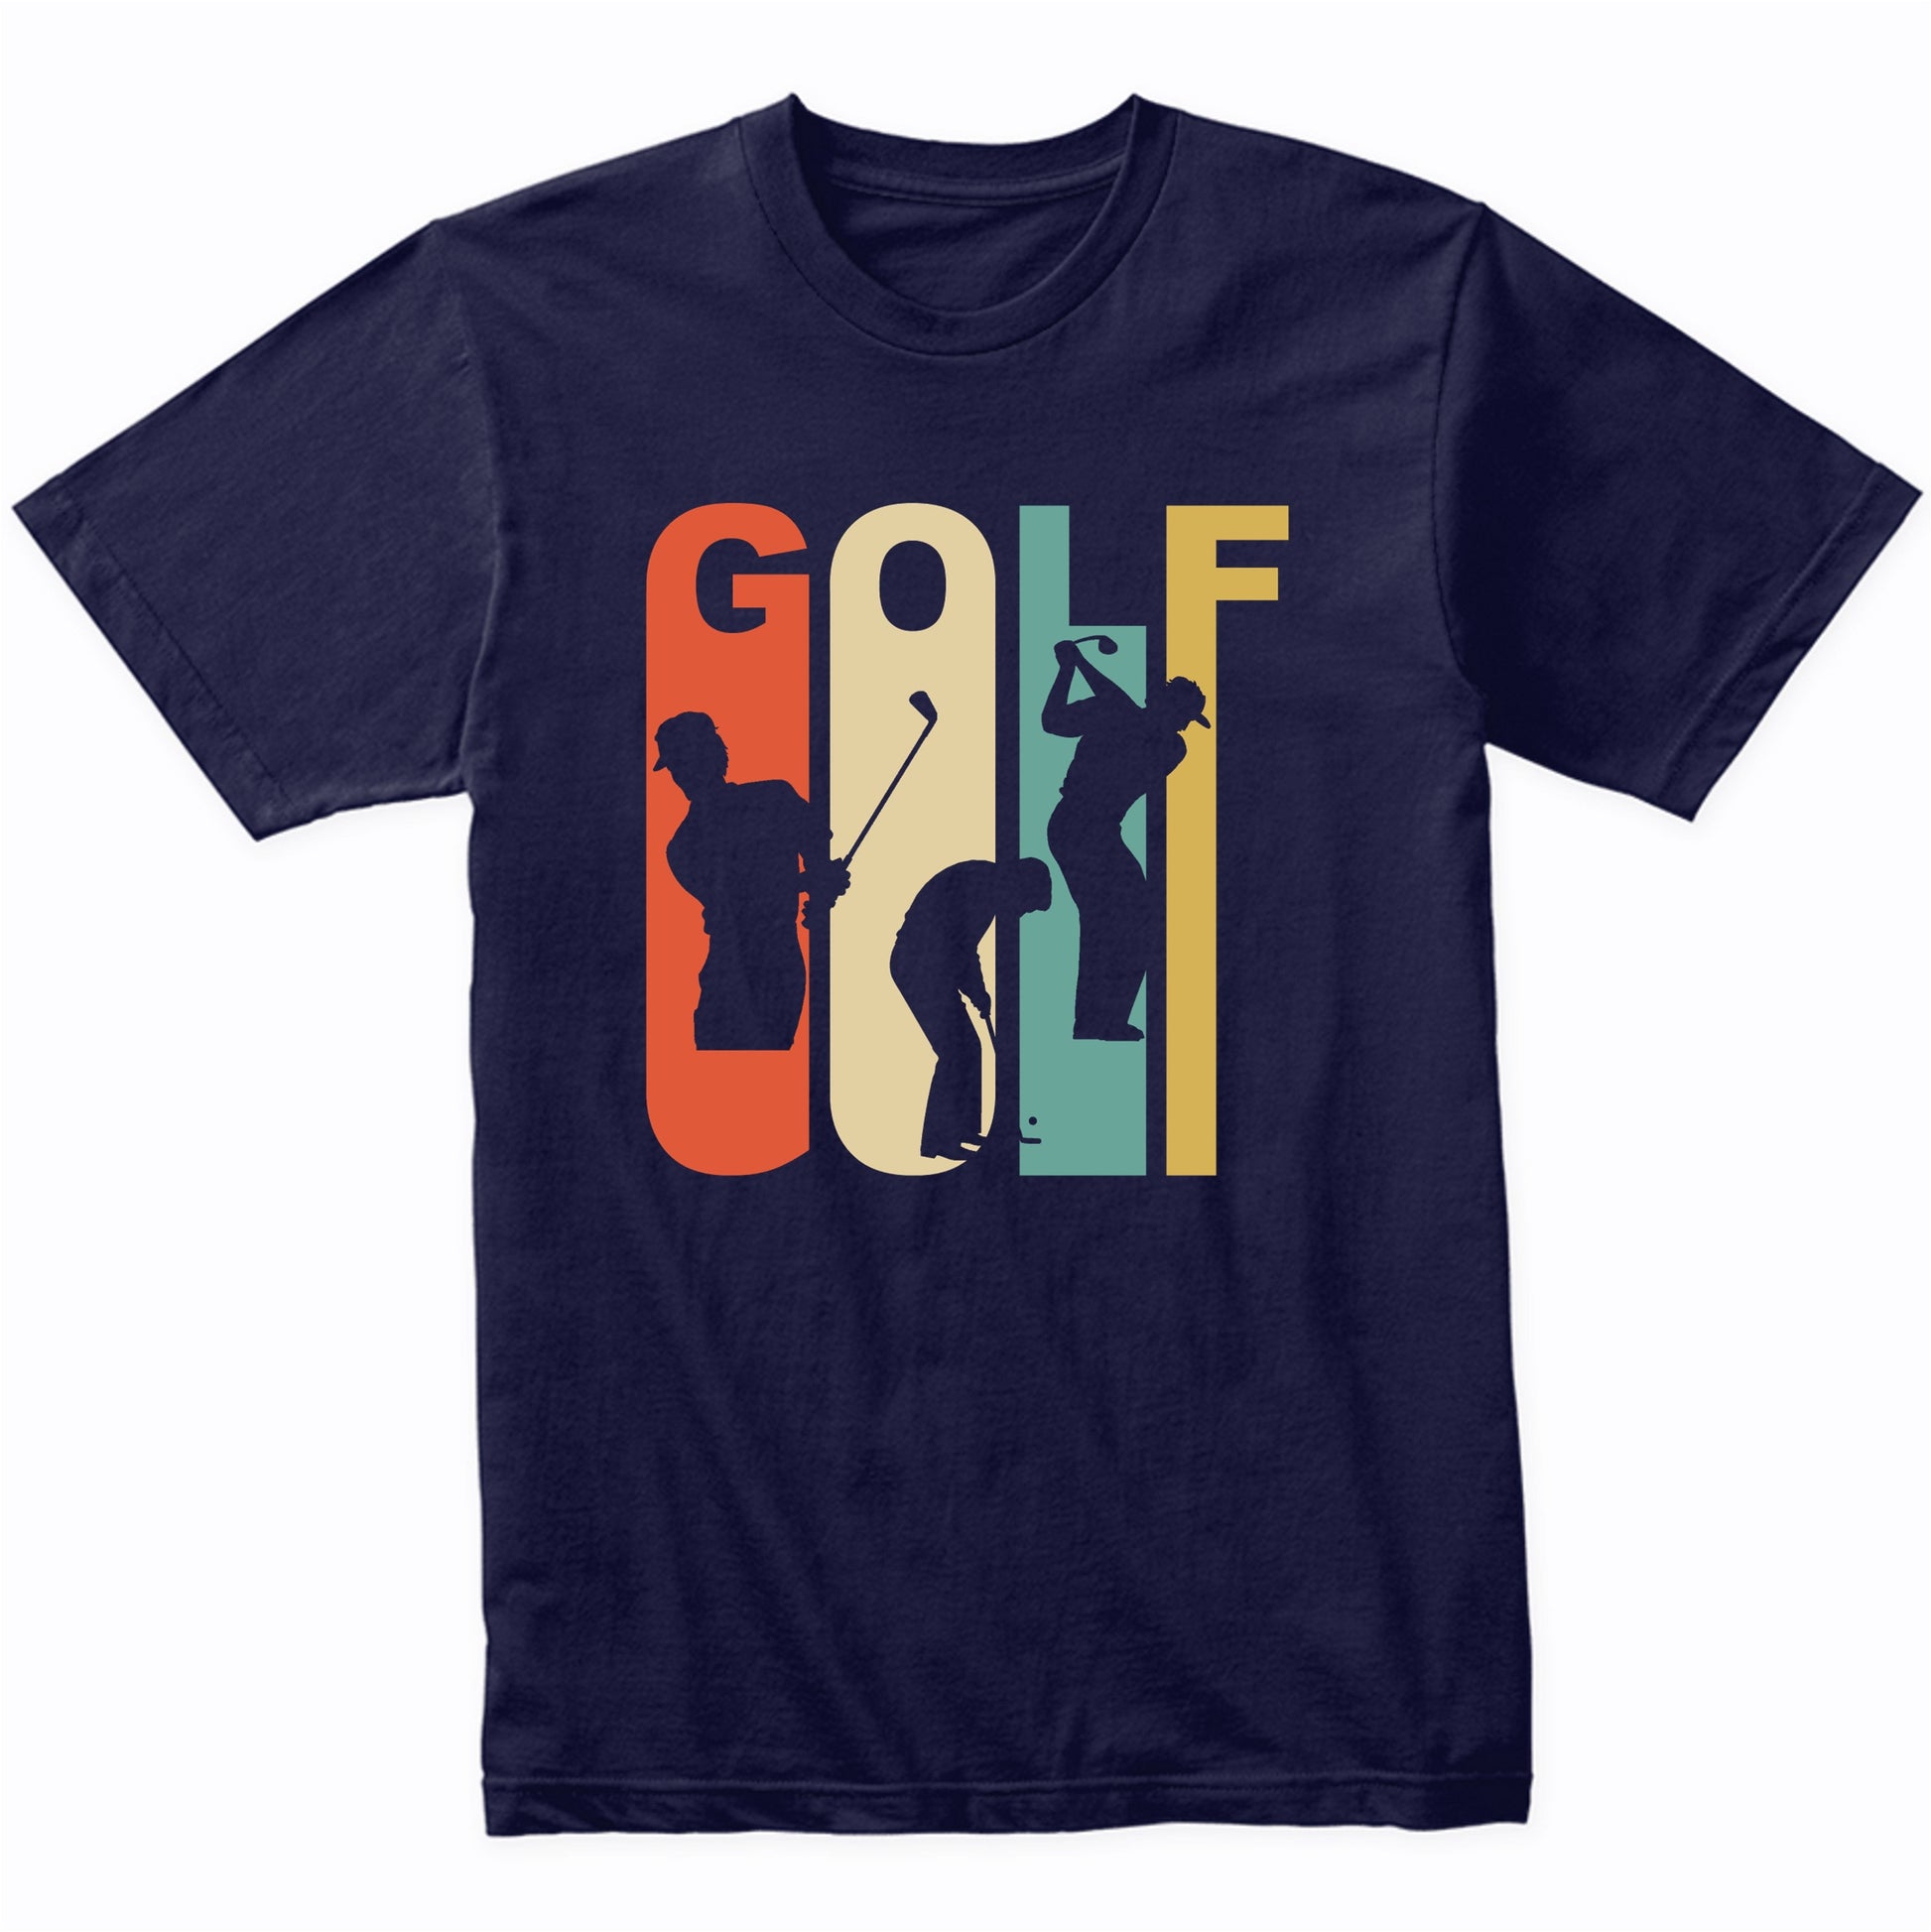 Vintage Retro 1970's Style Golf Golfing T-Shirt